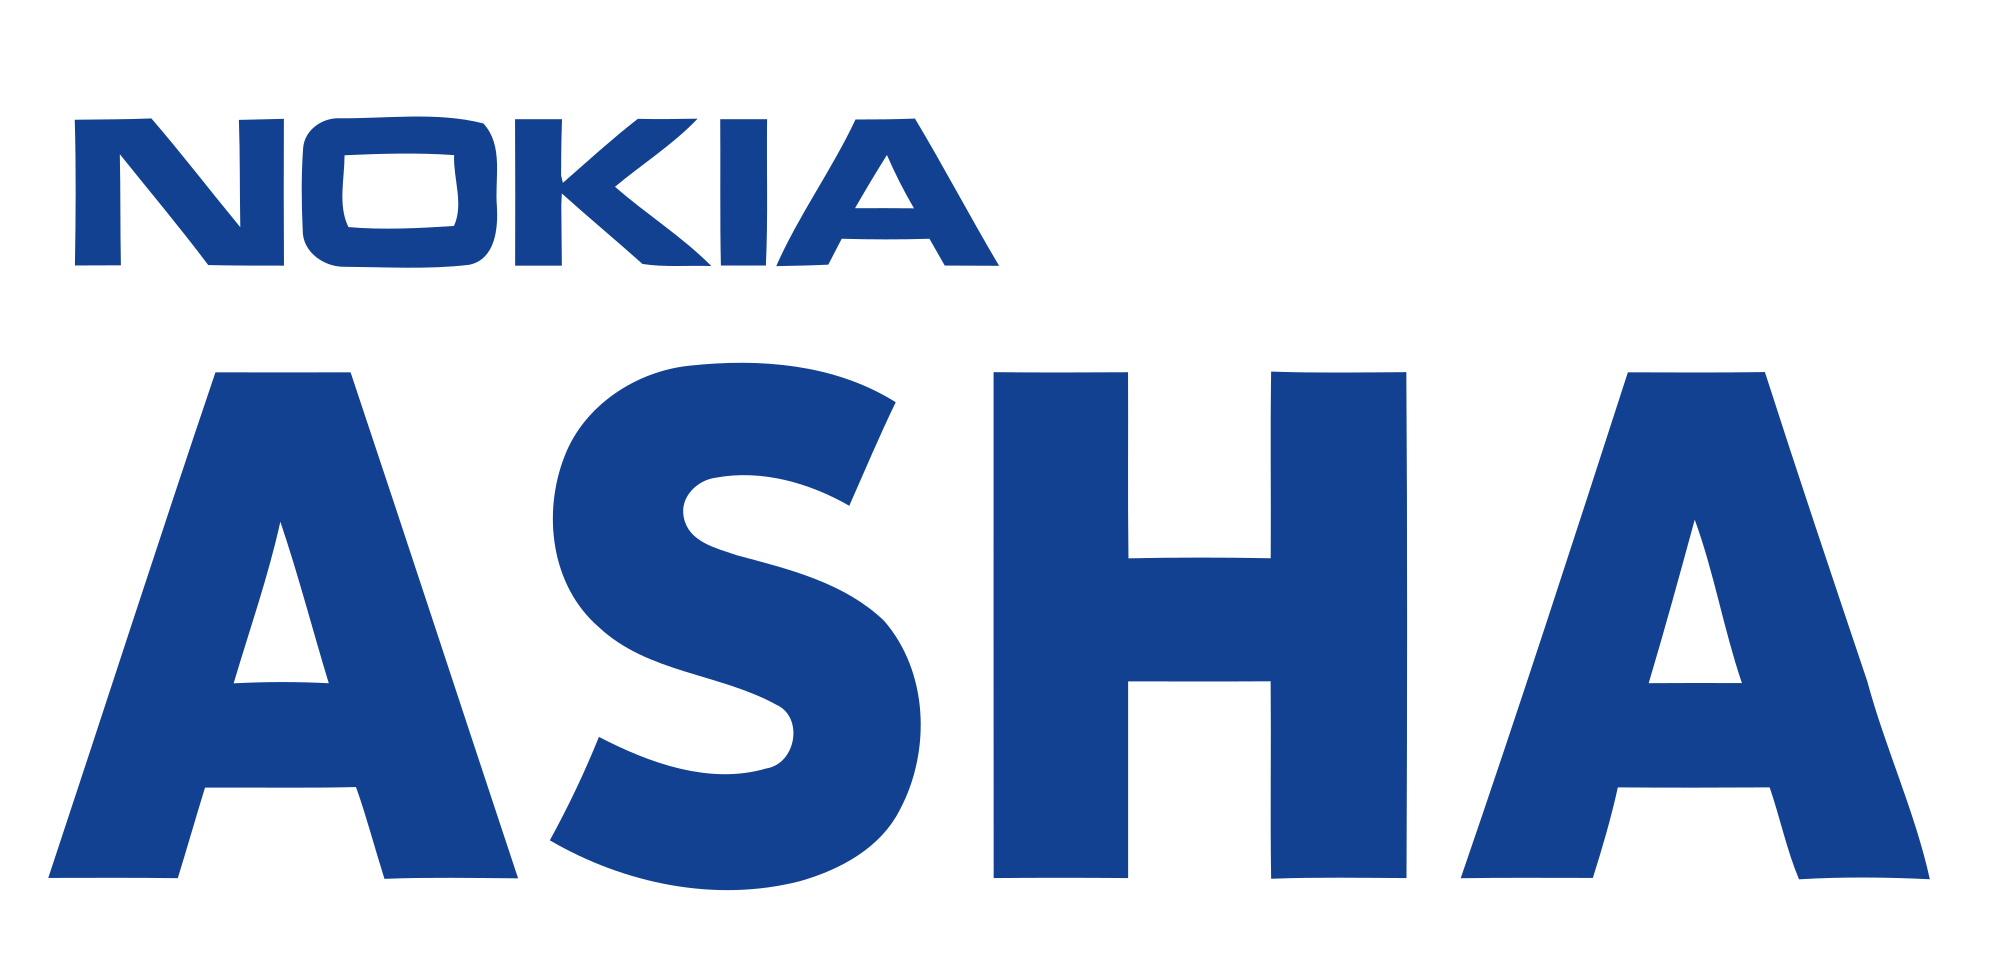 Asha Logo - Nokia Asha logo.svg